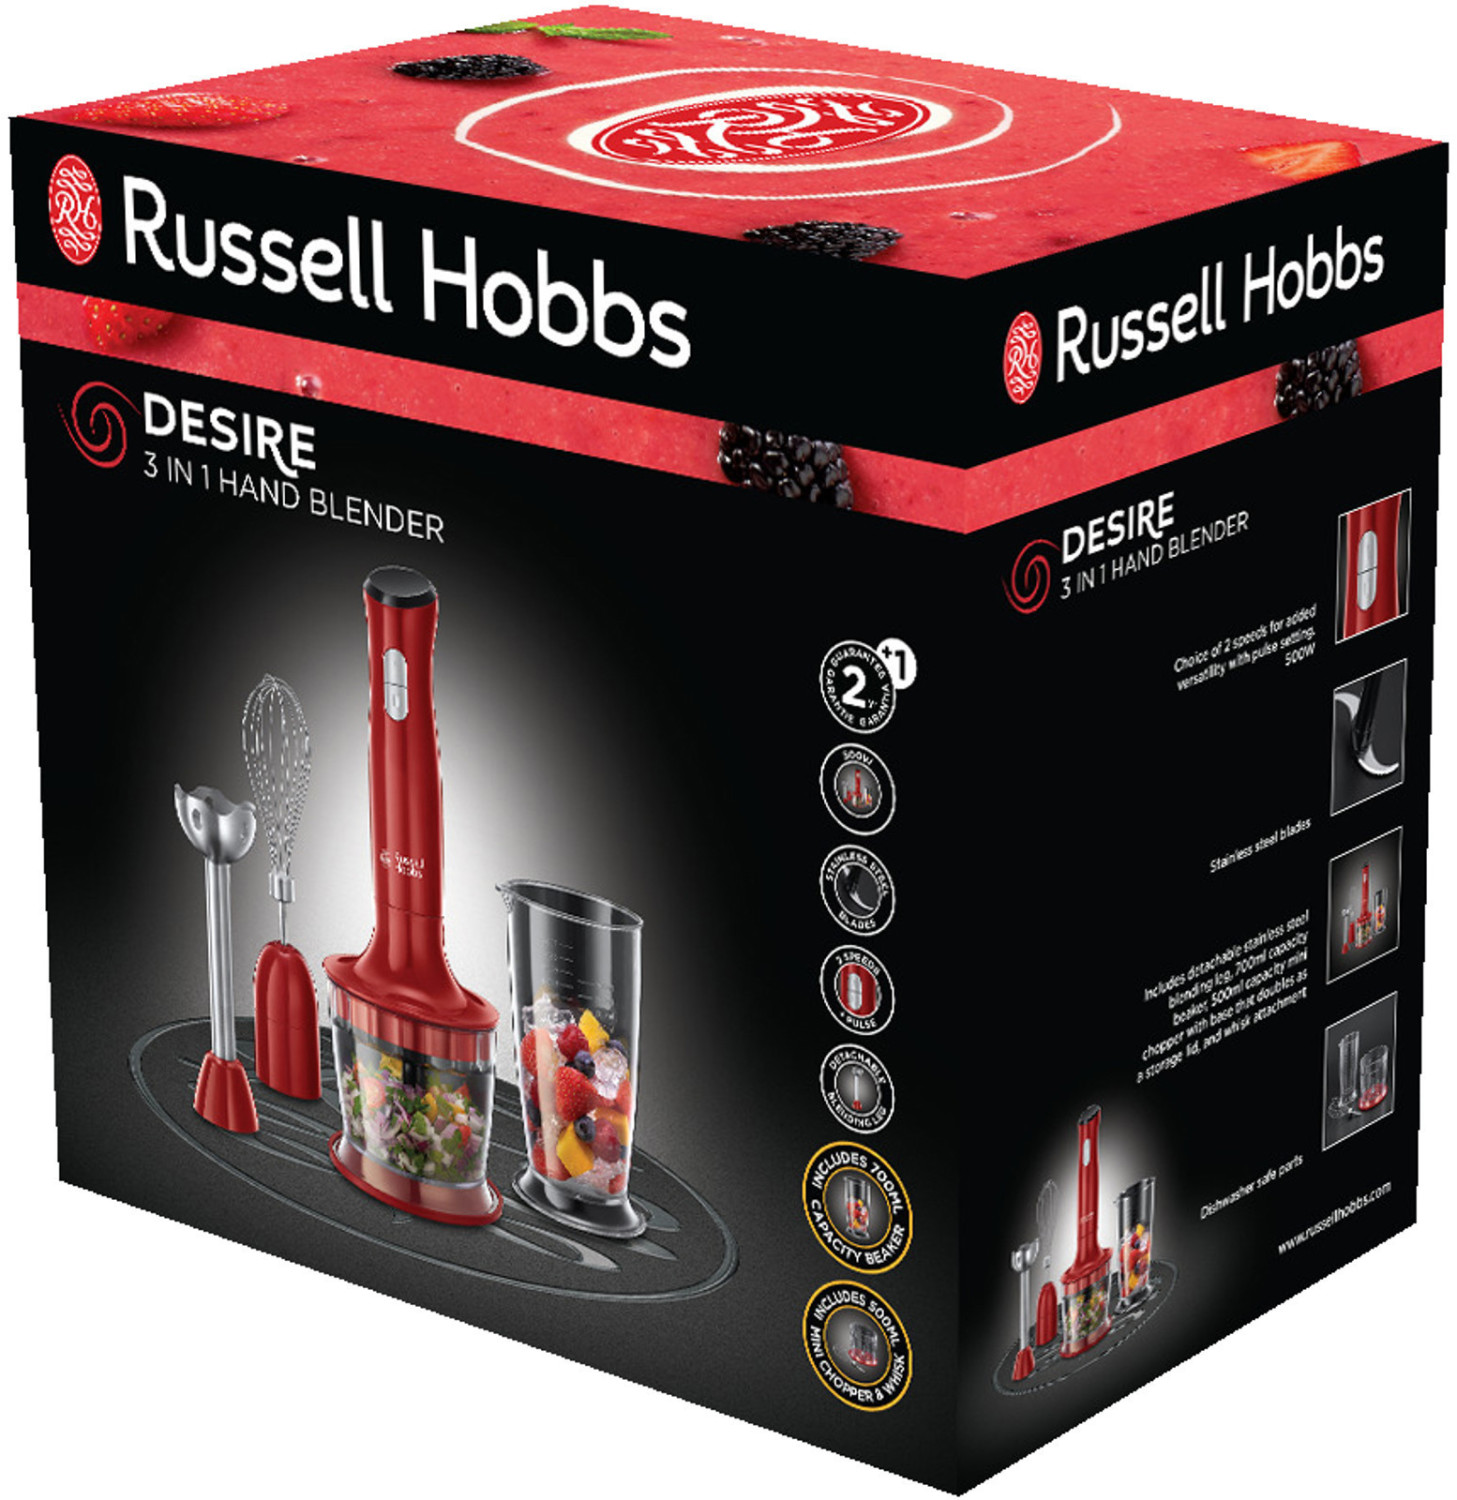 Russell Hobbs Desire 35,84 | € 24700-56 bei Preisvergleich ab